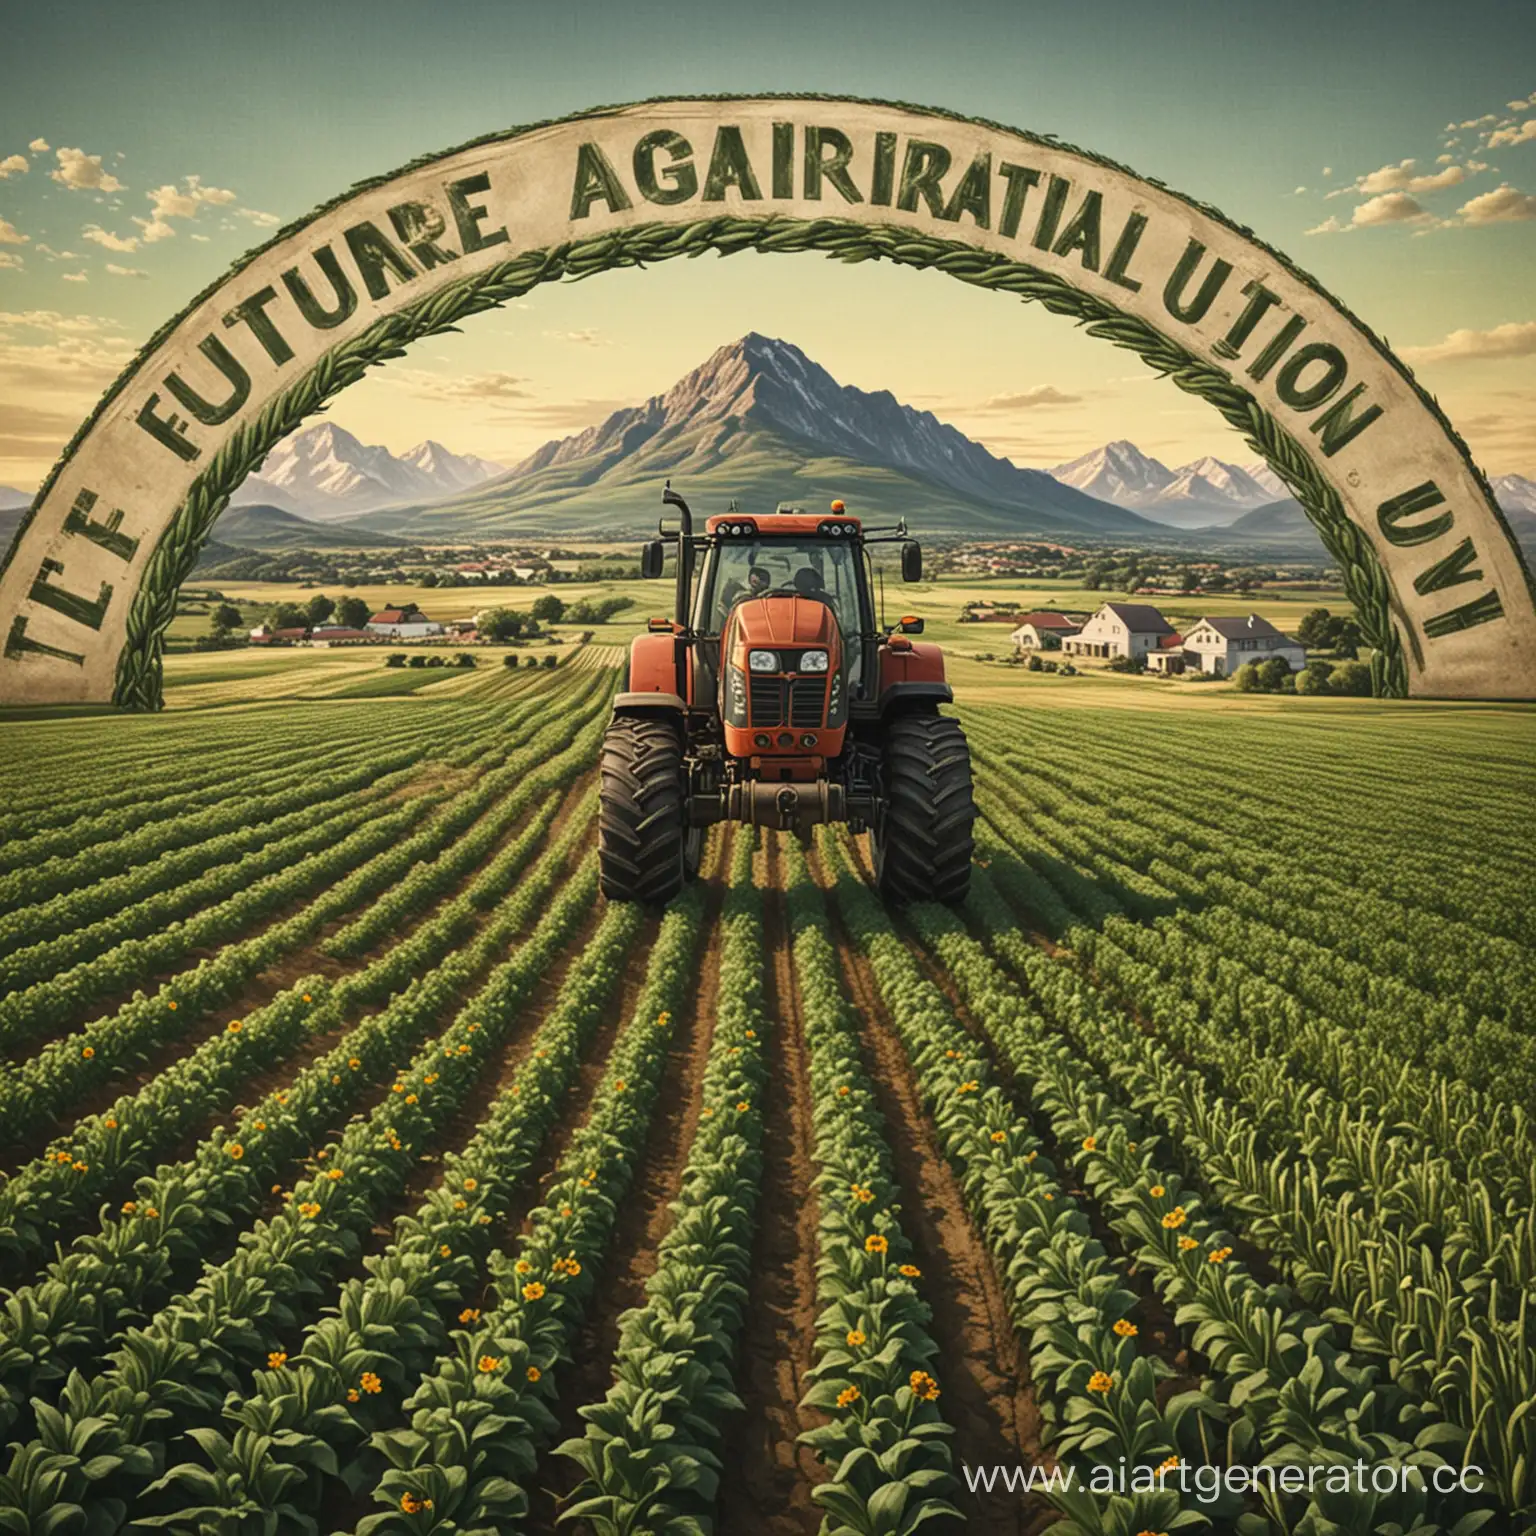 Futuristic-Agricultural-Union-Technological-Farming-Collaboration